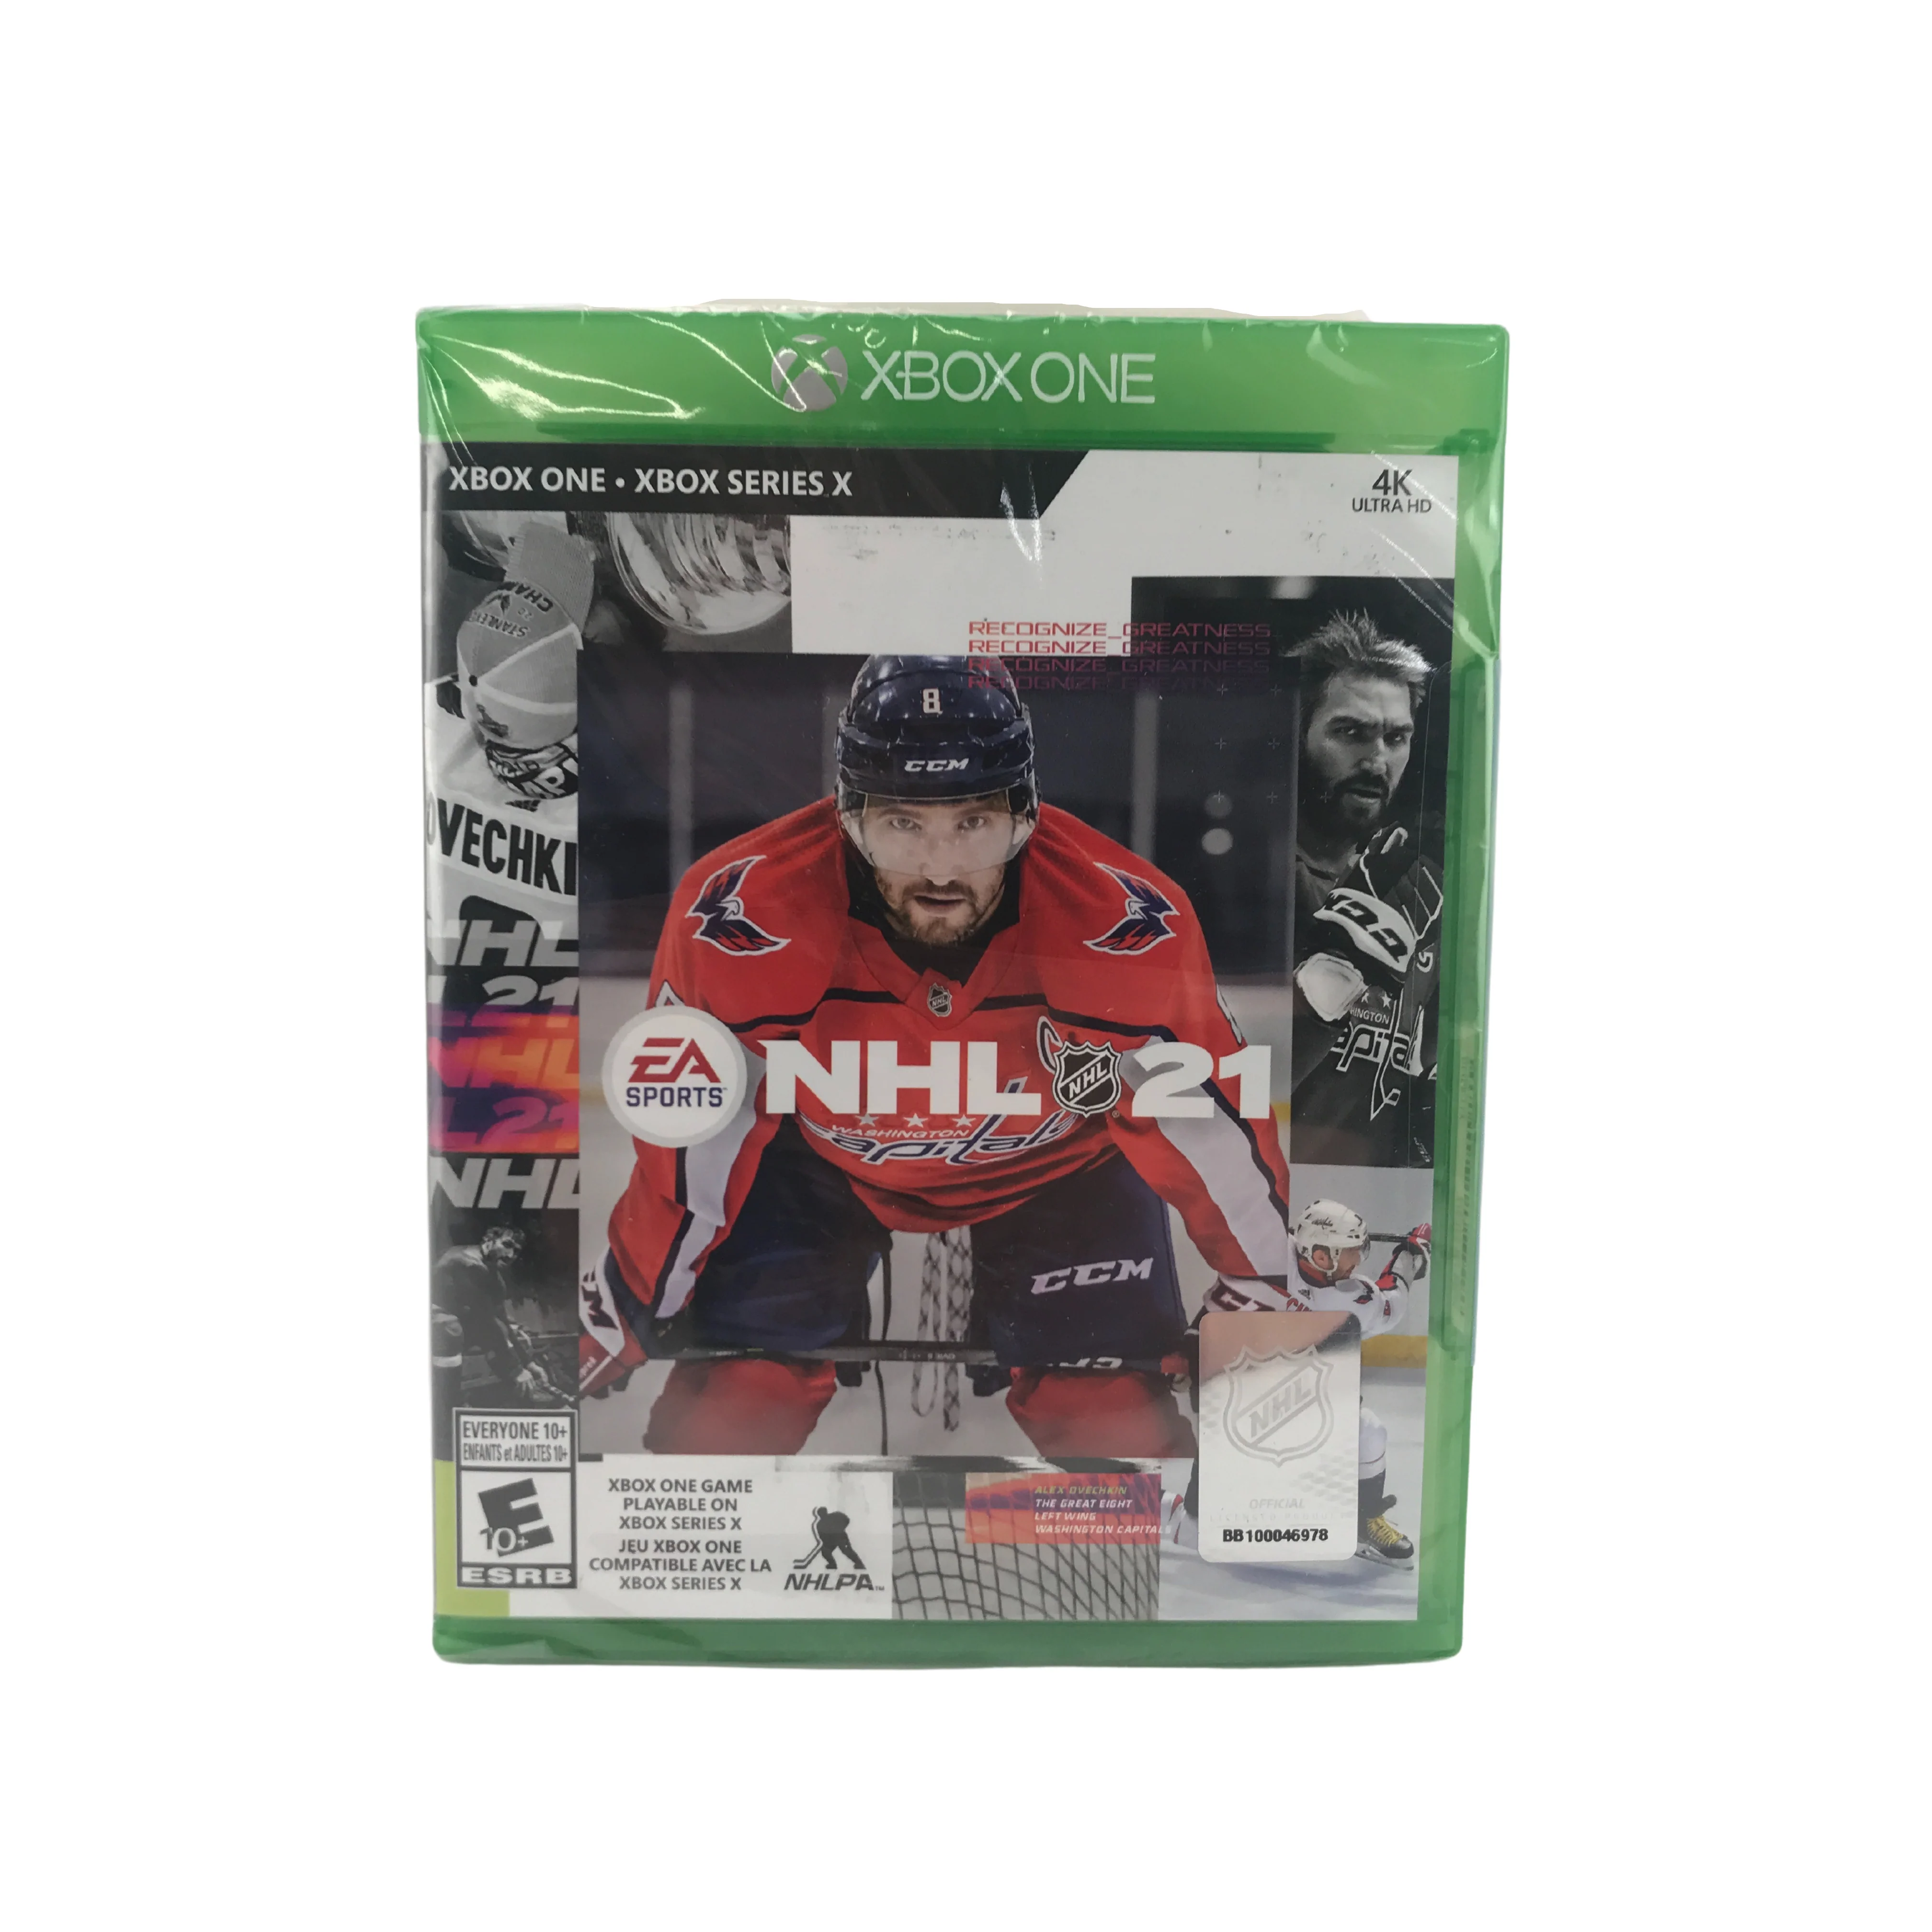 Xbox One NHL 2021 Video Game: Rated Everyone 10+ / Xbox Series X / Xbox One / 4K Ultra HD